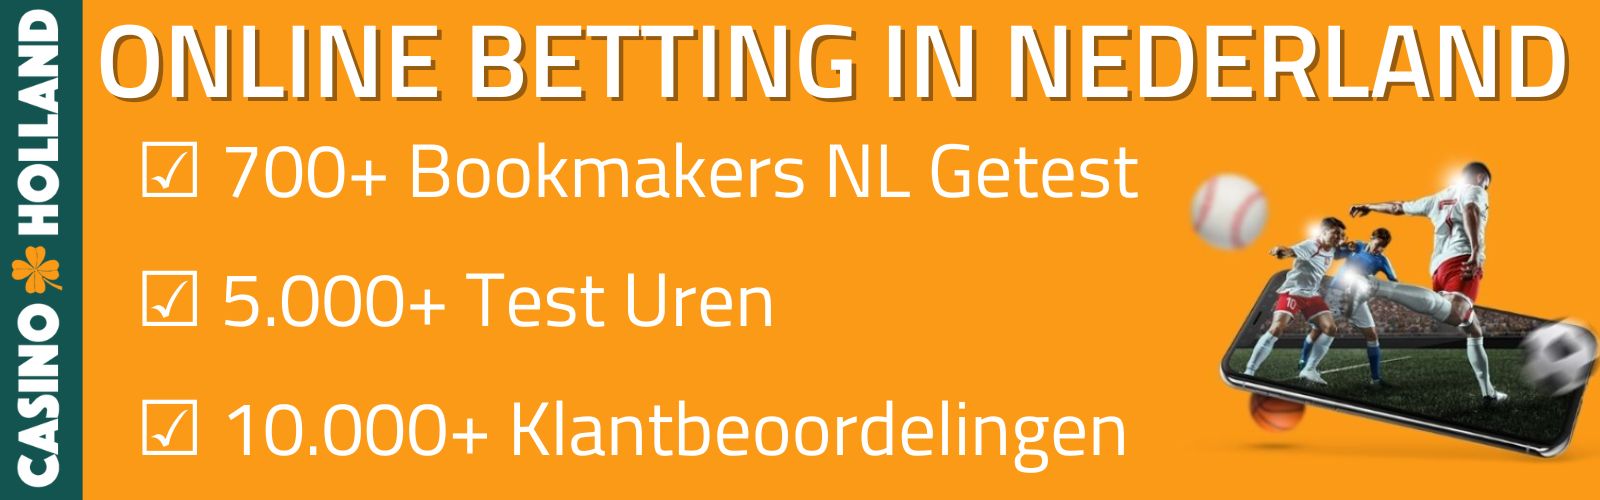 Online Betting Nederland